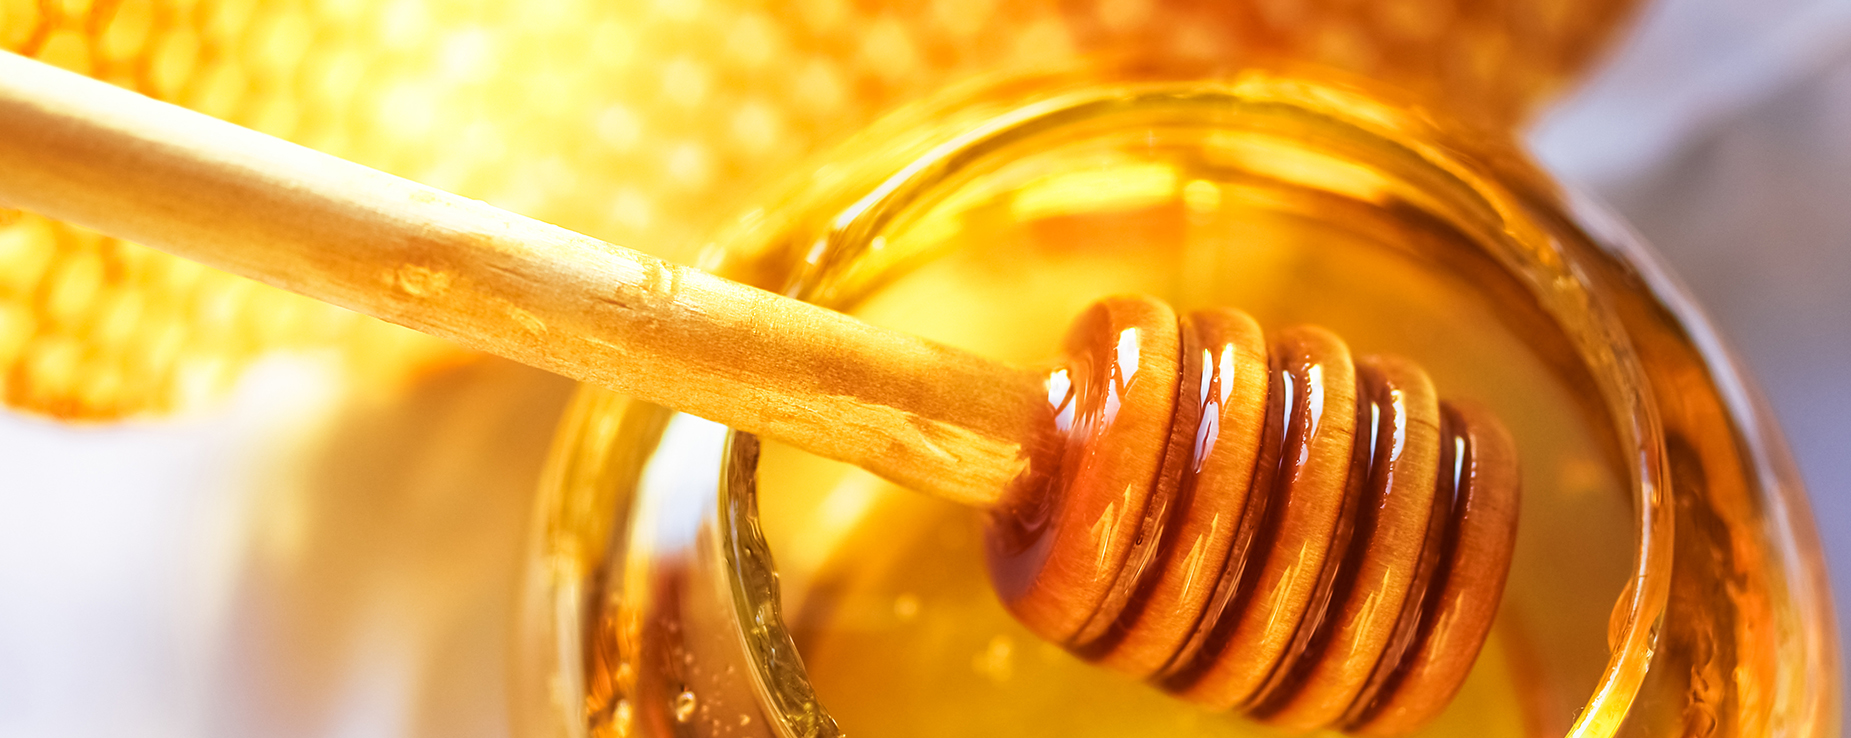 Honey | Malt Products Corporation